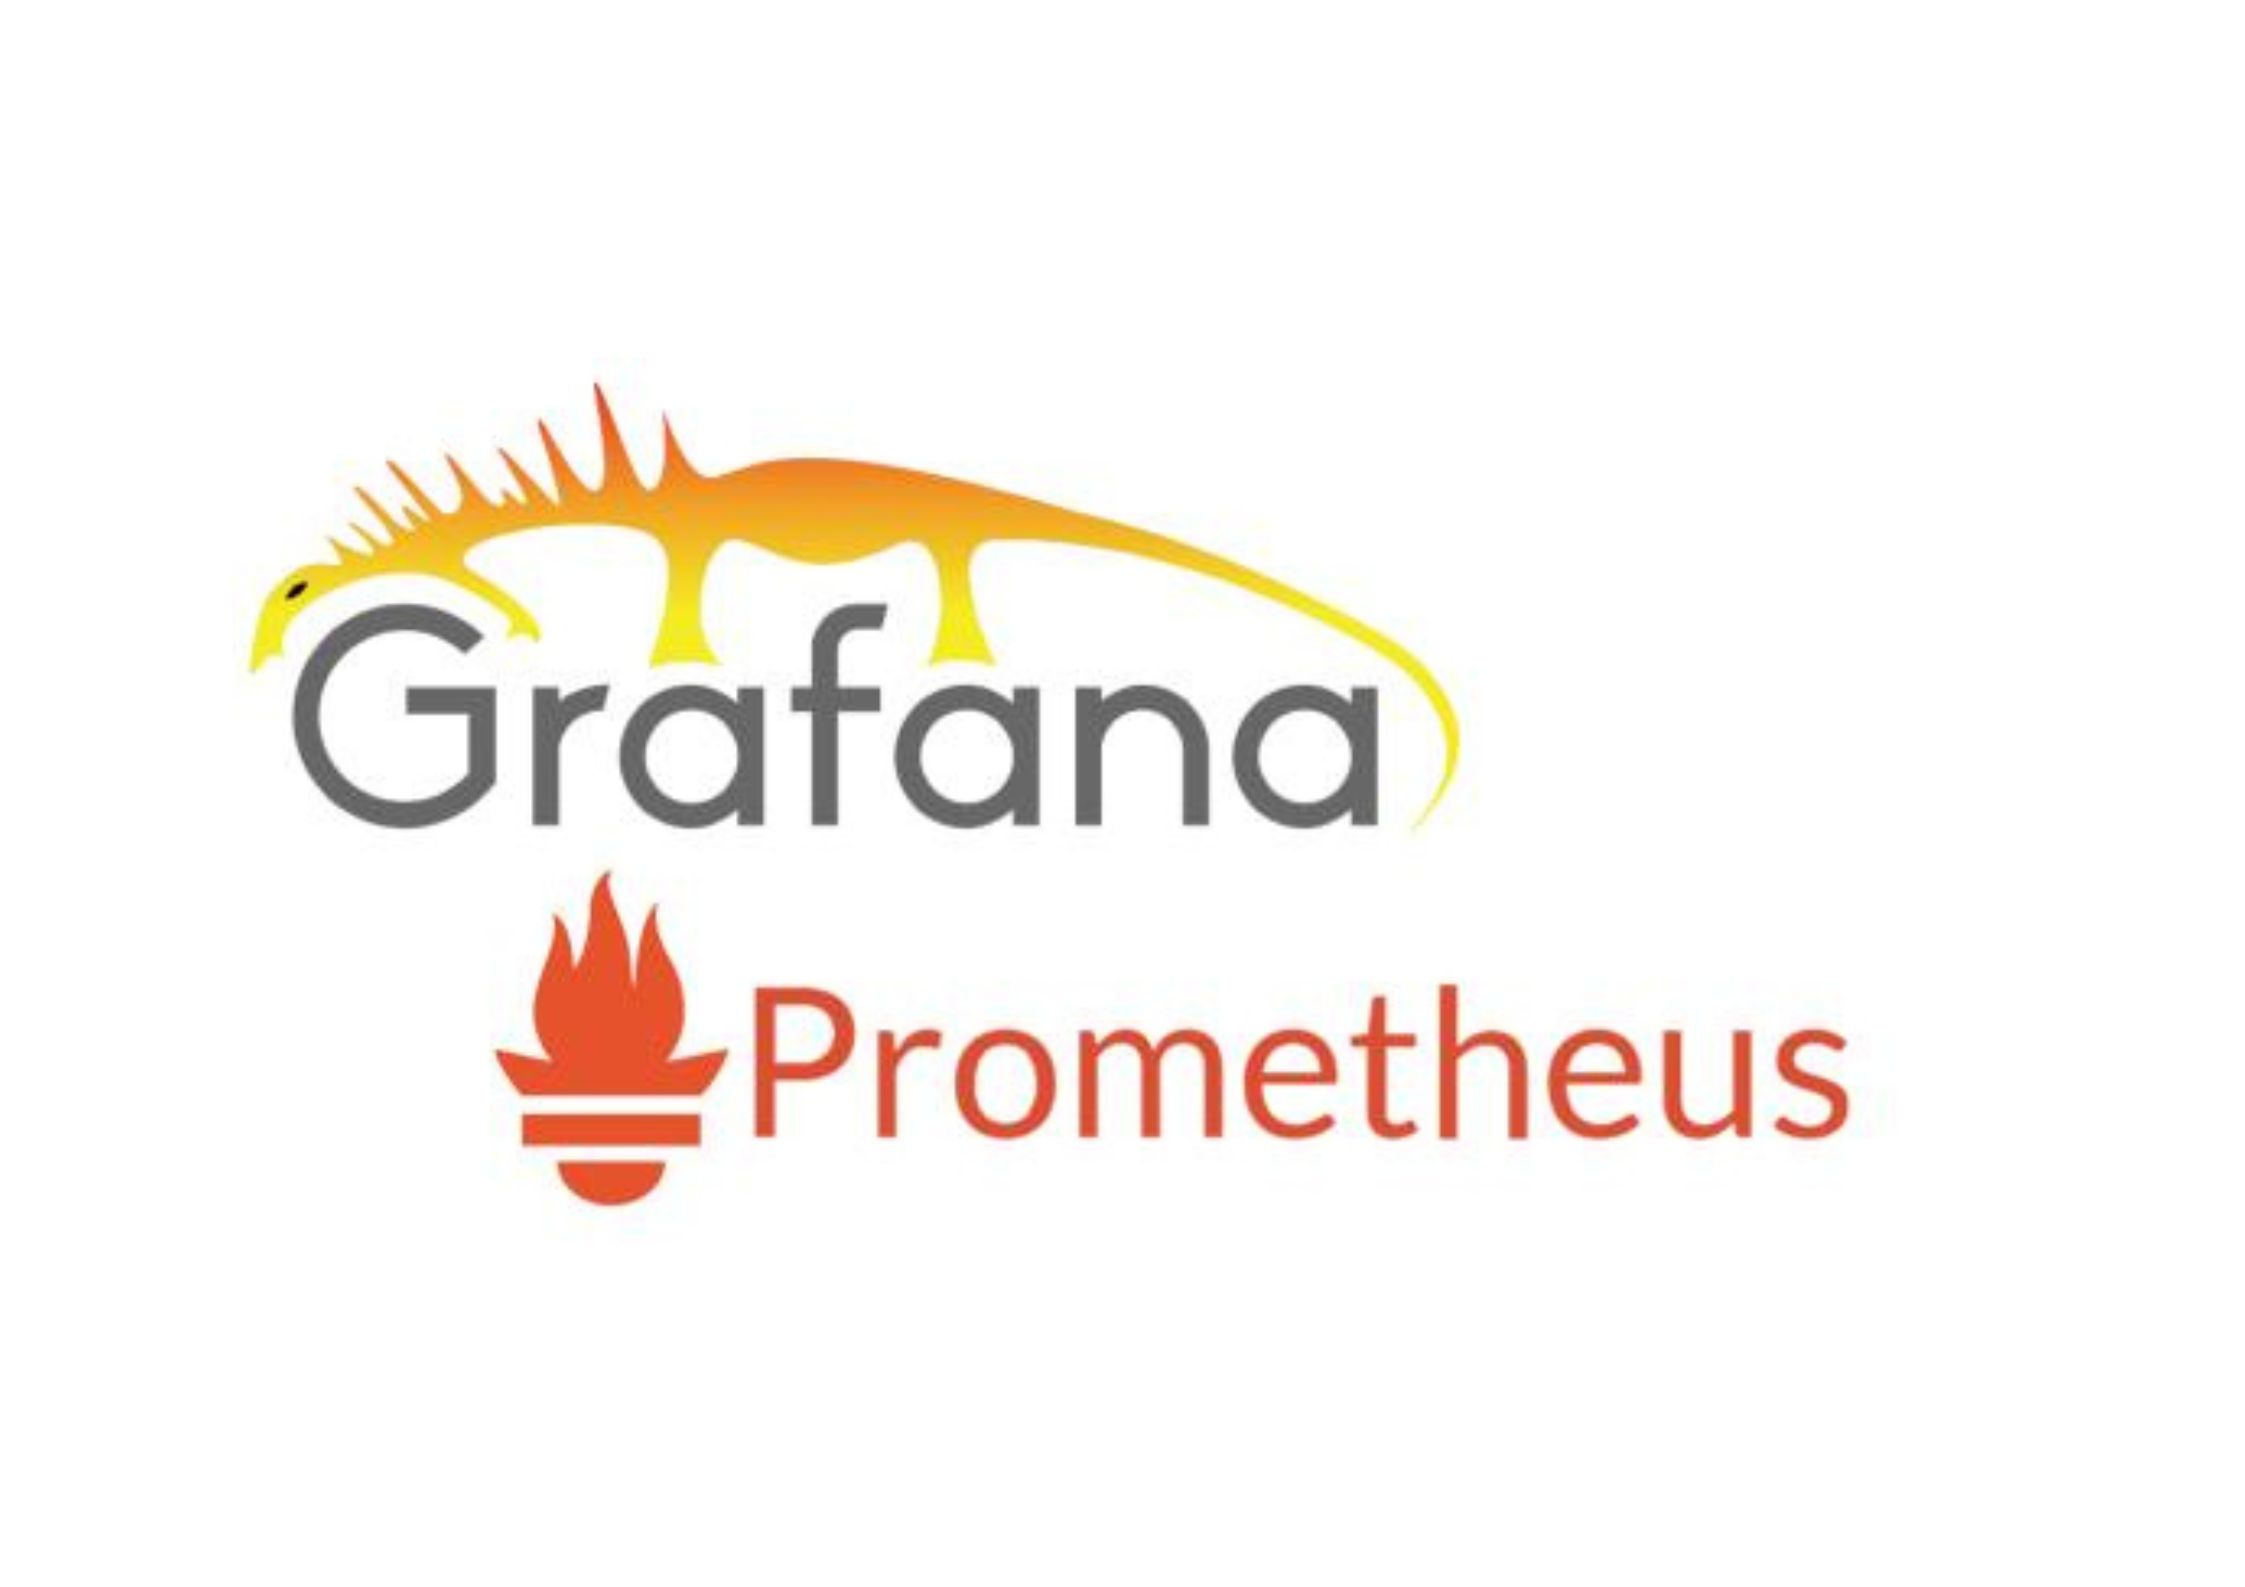 Grafana and Prometheus for monitoring